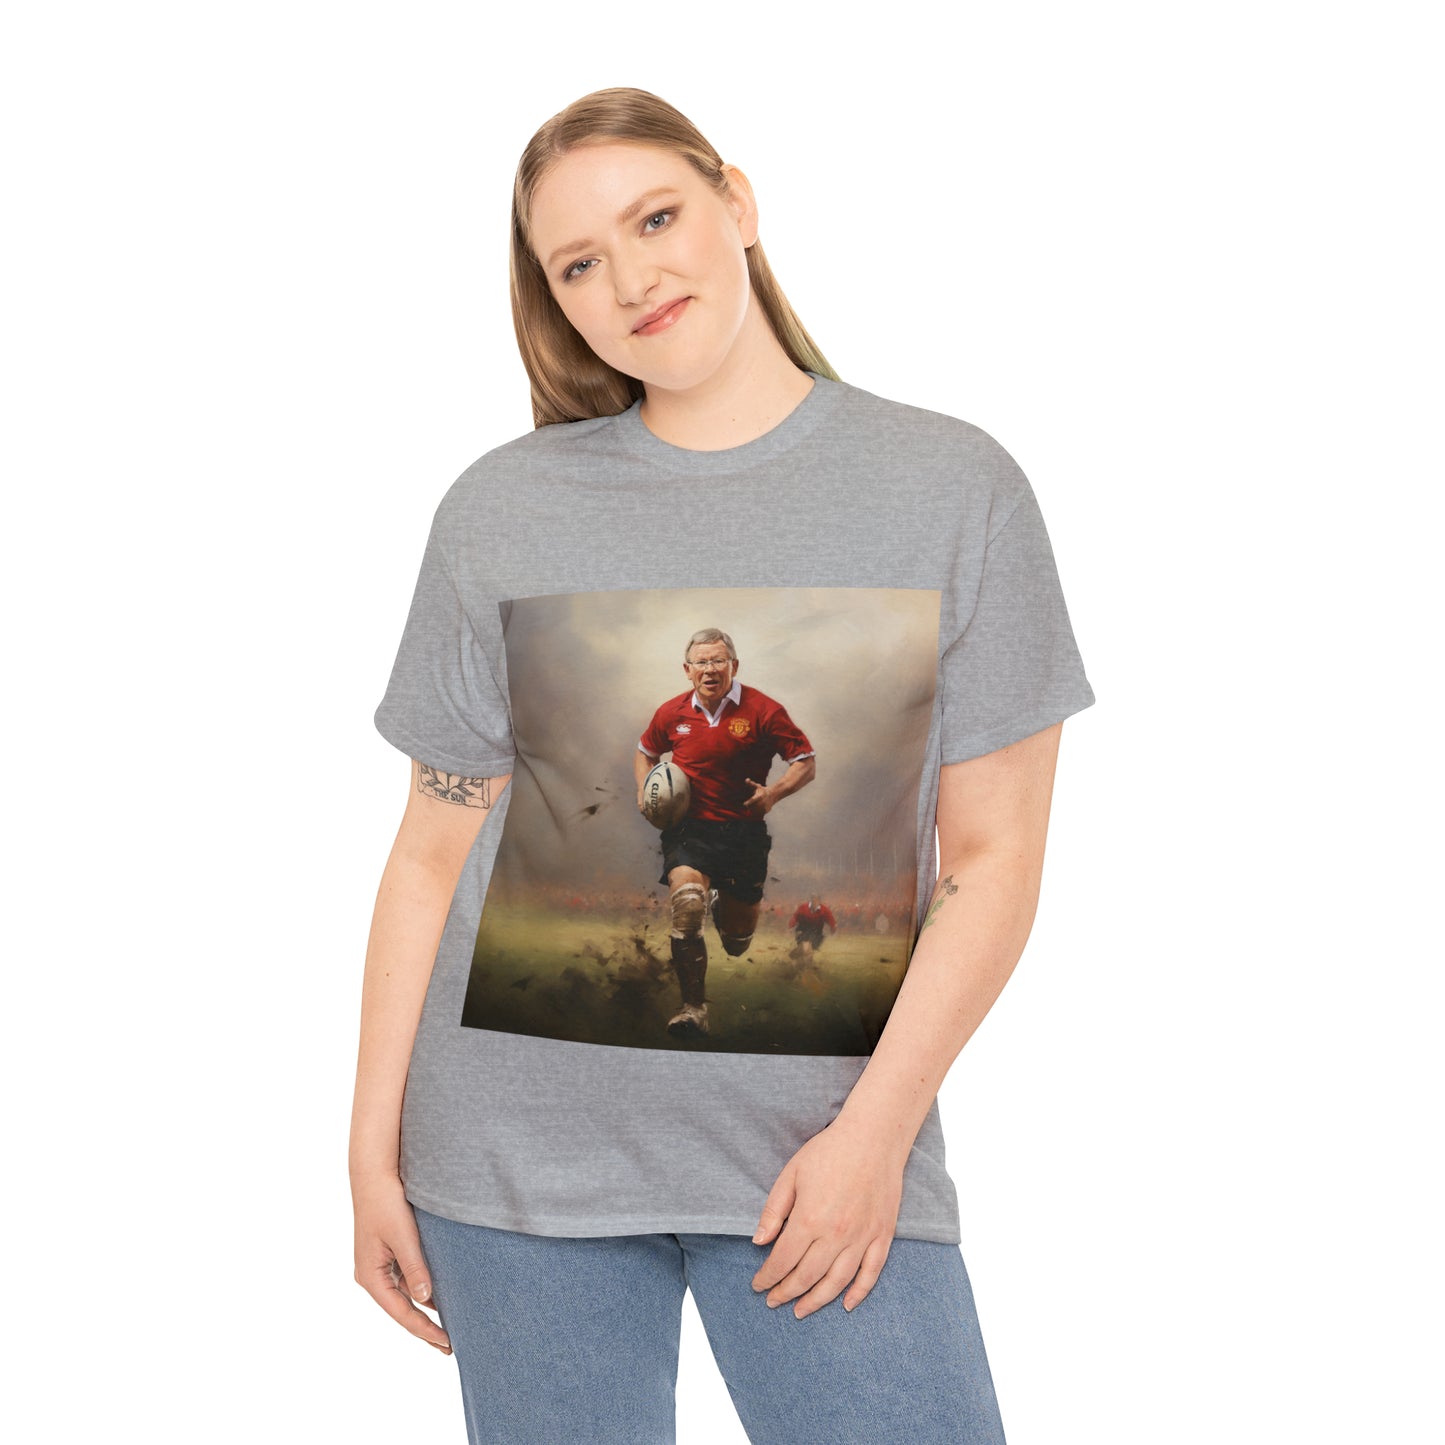 Fergie - light shirts